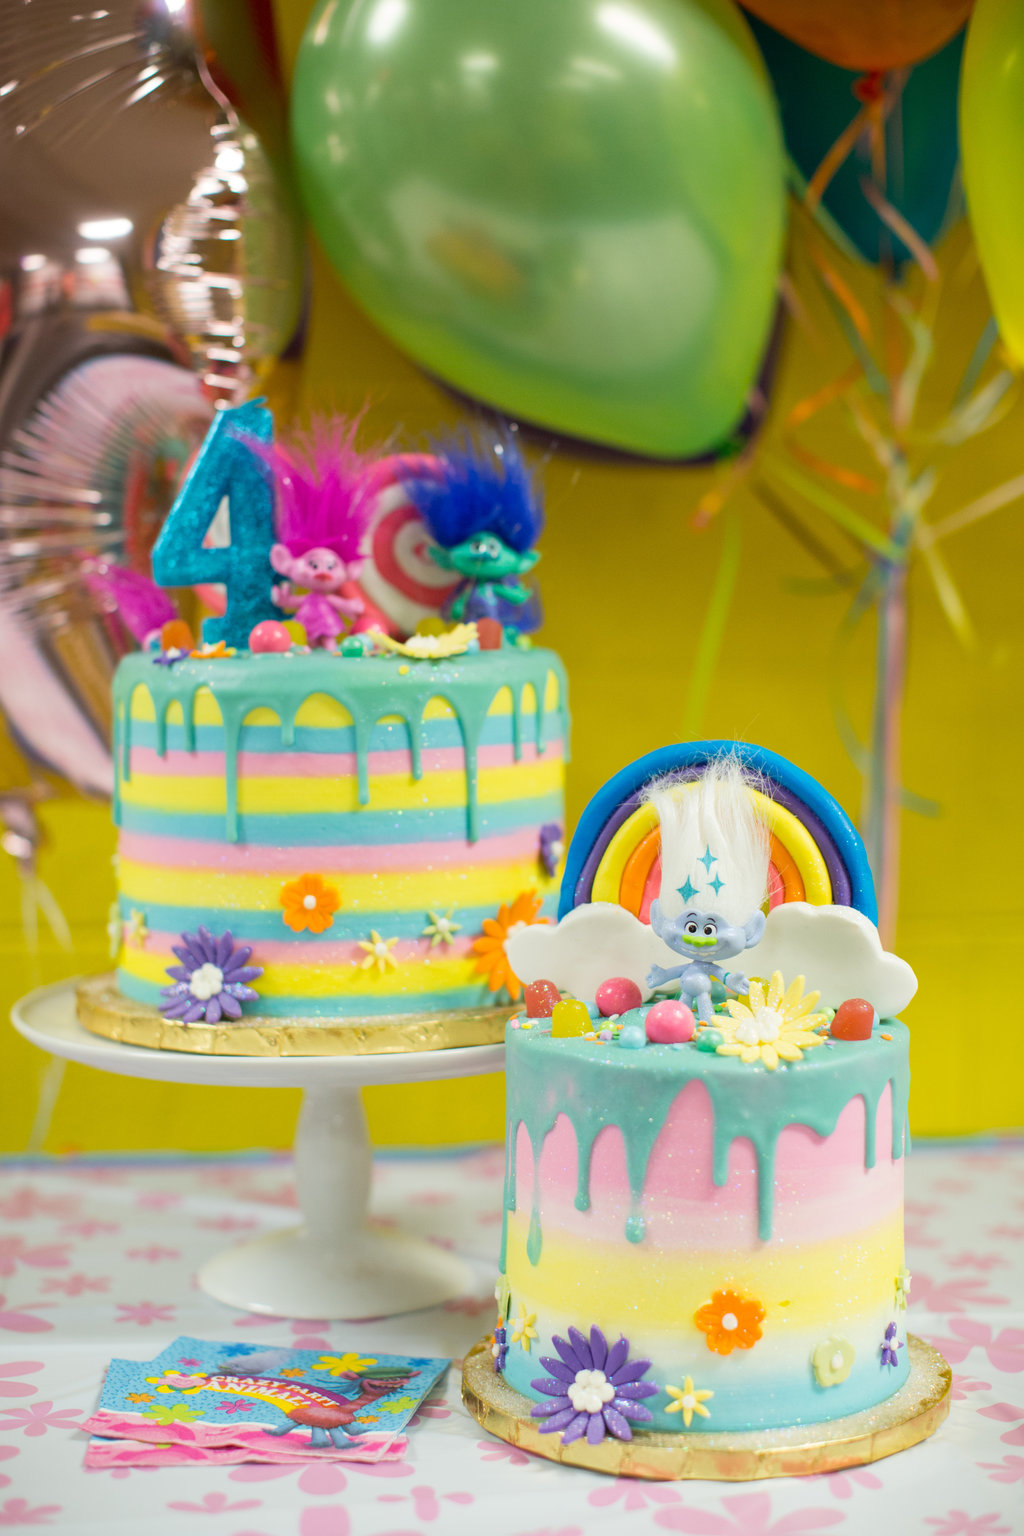 jessica-zimmerman-child-birthday-trolls-cake.jpg